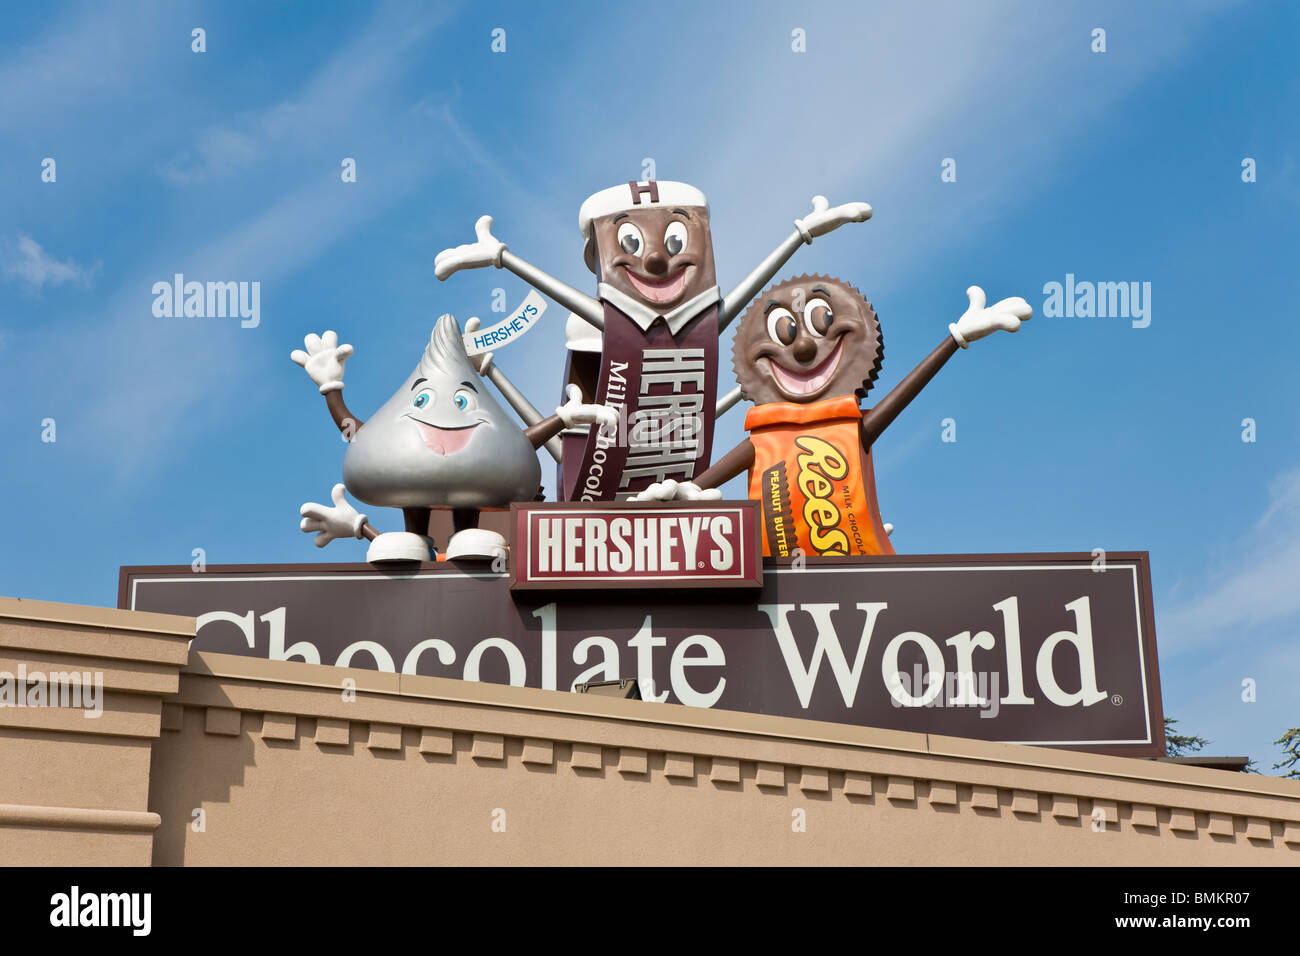 Hershey, PA - Sept 2009 - Candy-Comic-Figuren auf Schild am Hershey's Chocolate World Fabrik speichern in Hershey, Pennsylvania Stockfoto